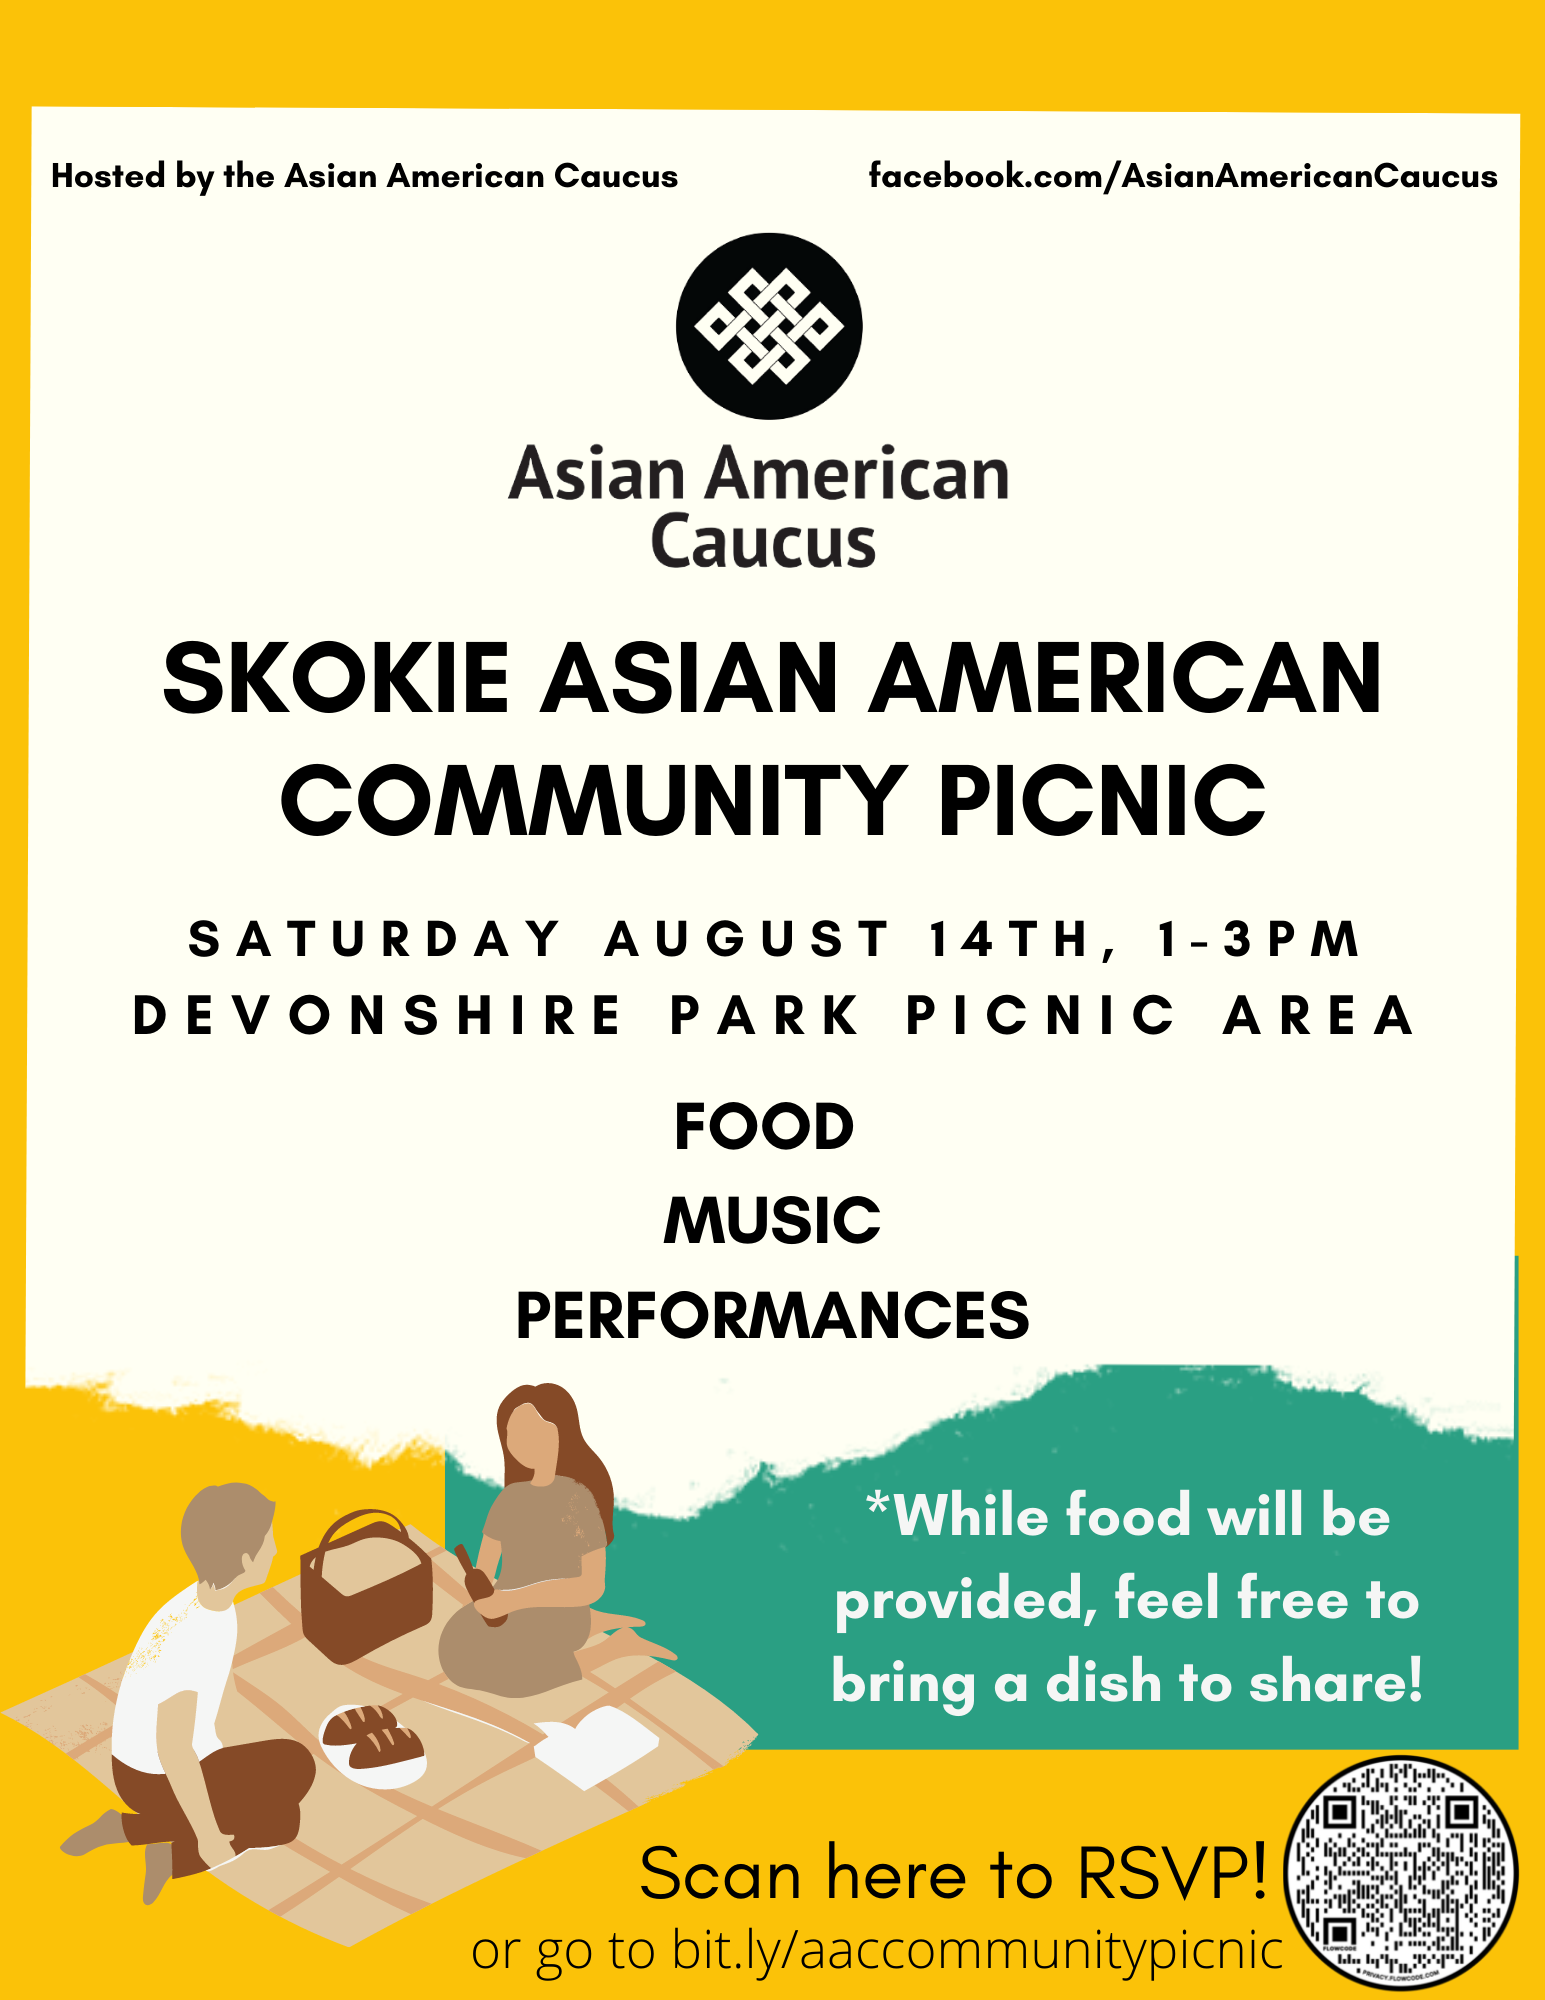 Skokie Asian American Community Picnic